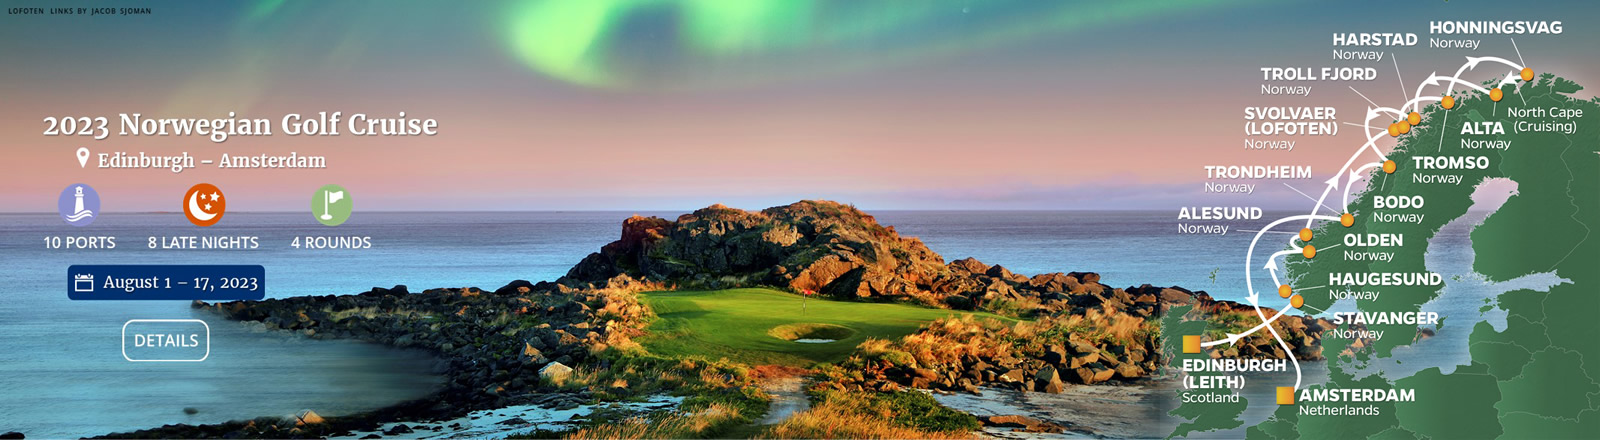 2023 Norwegian Golf Cruise